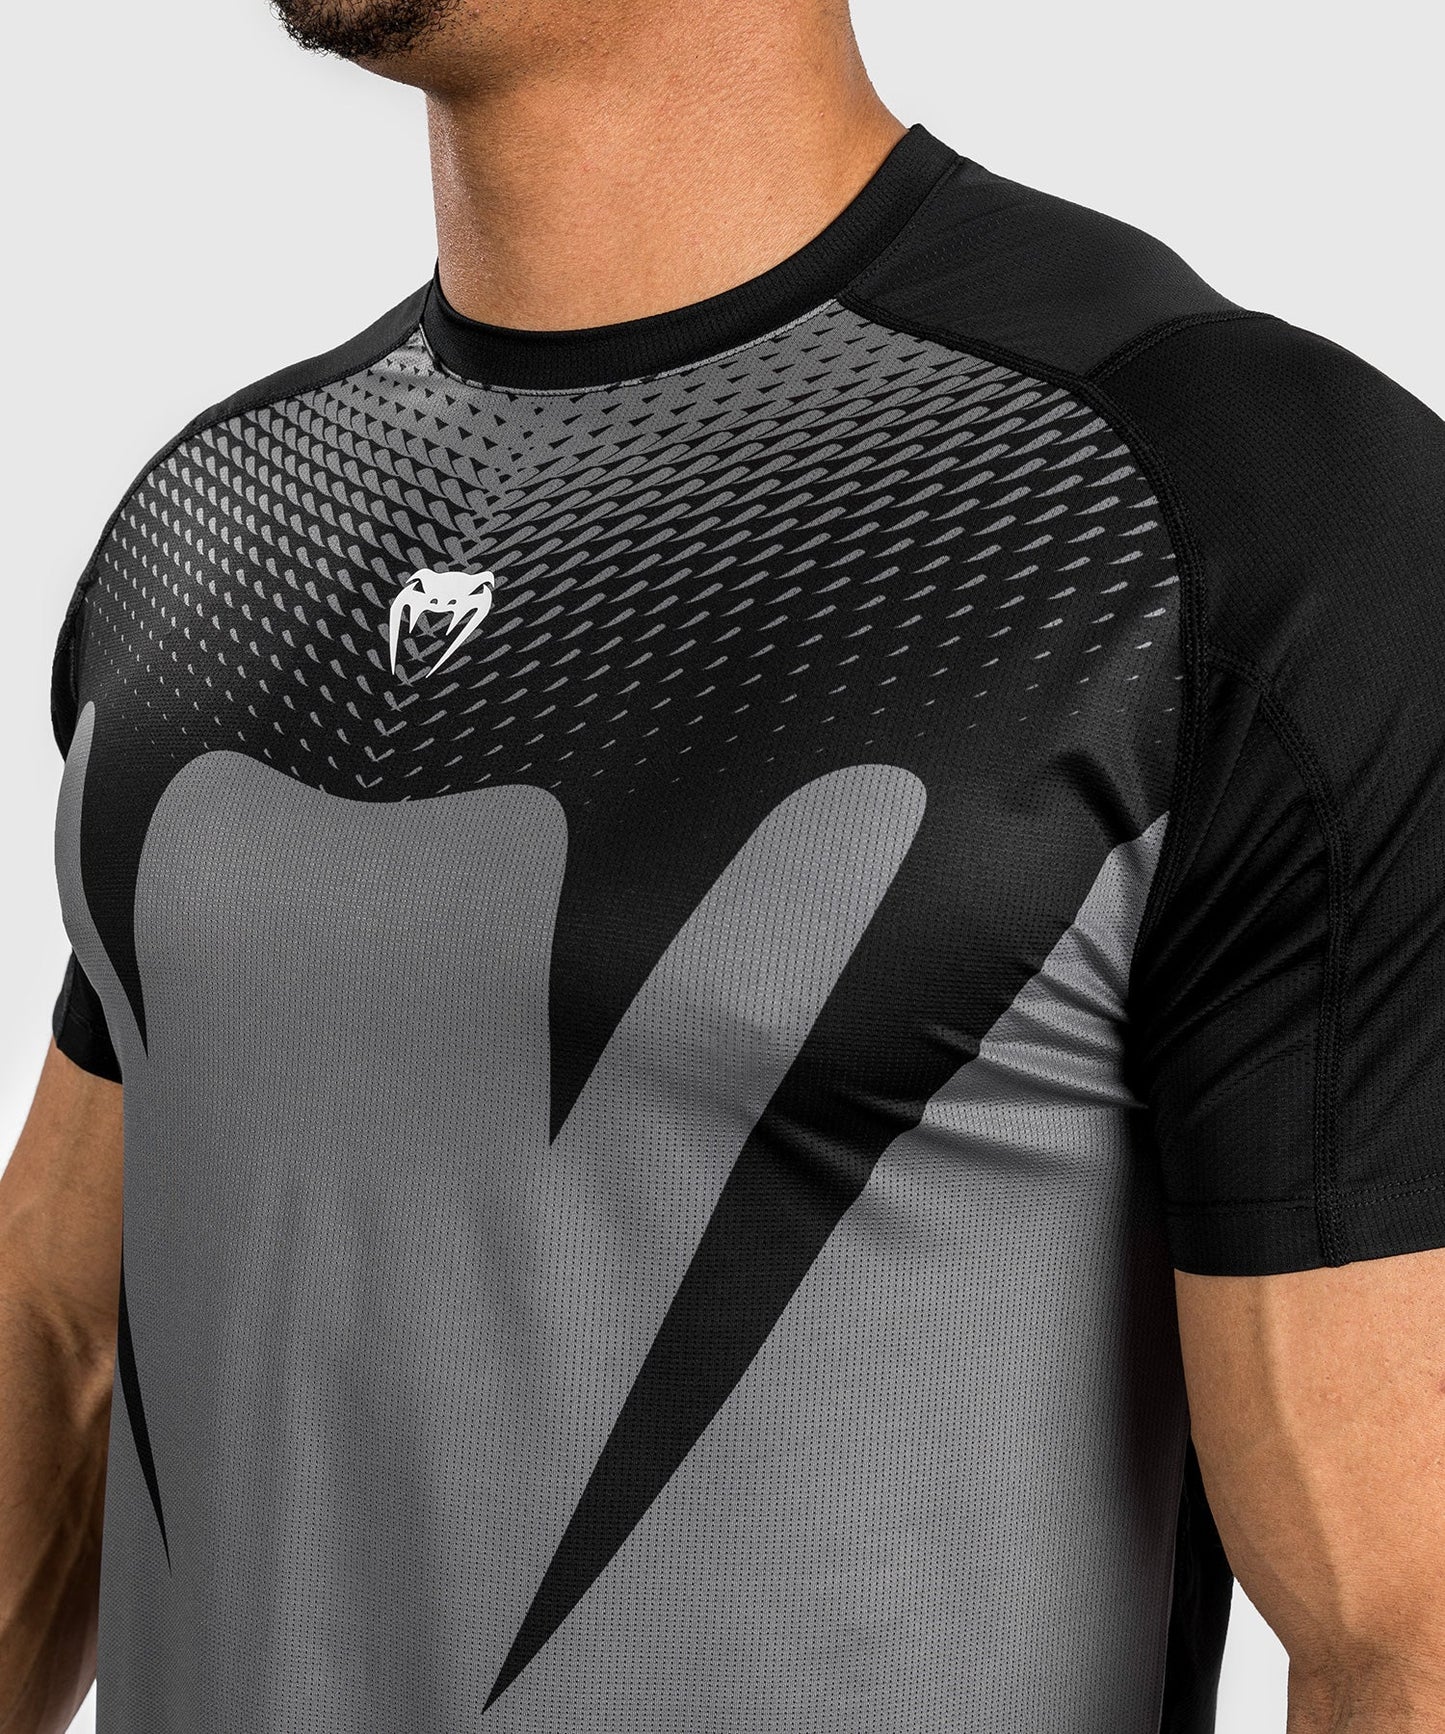 Venum Attack Men's Dry-Tech T-Shirt - Black